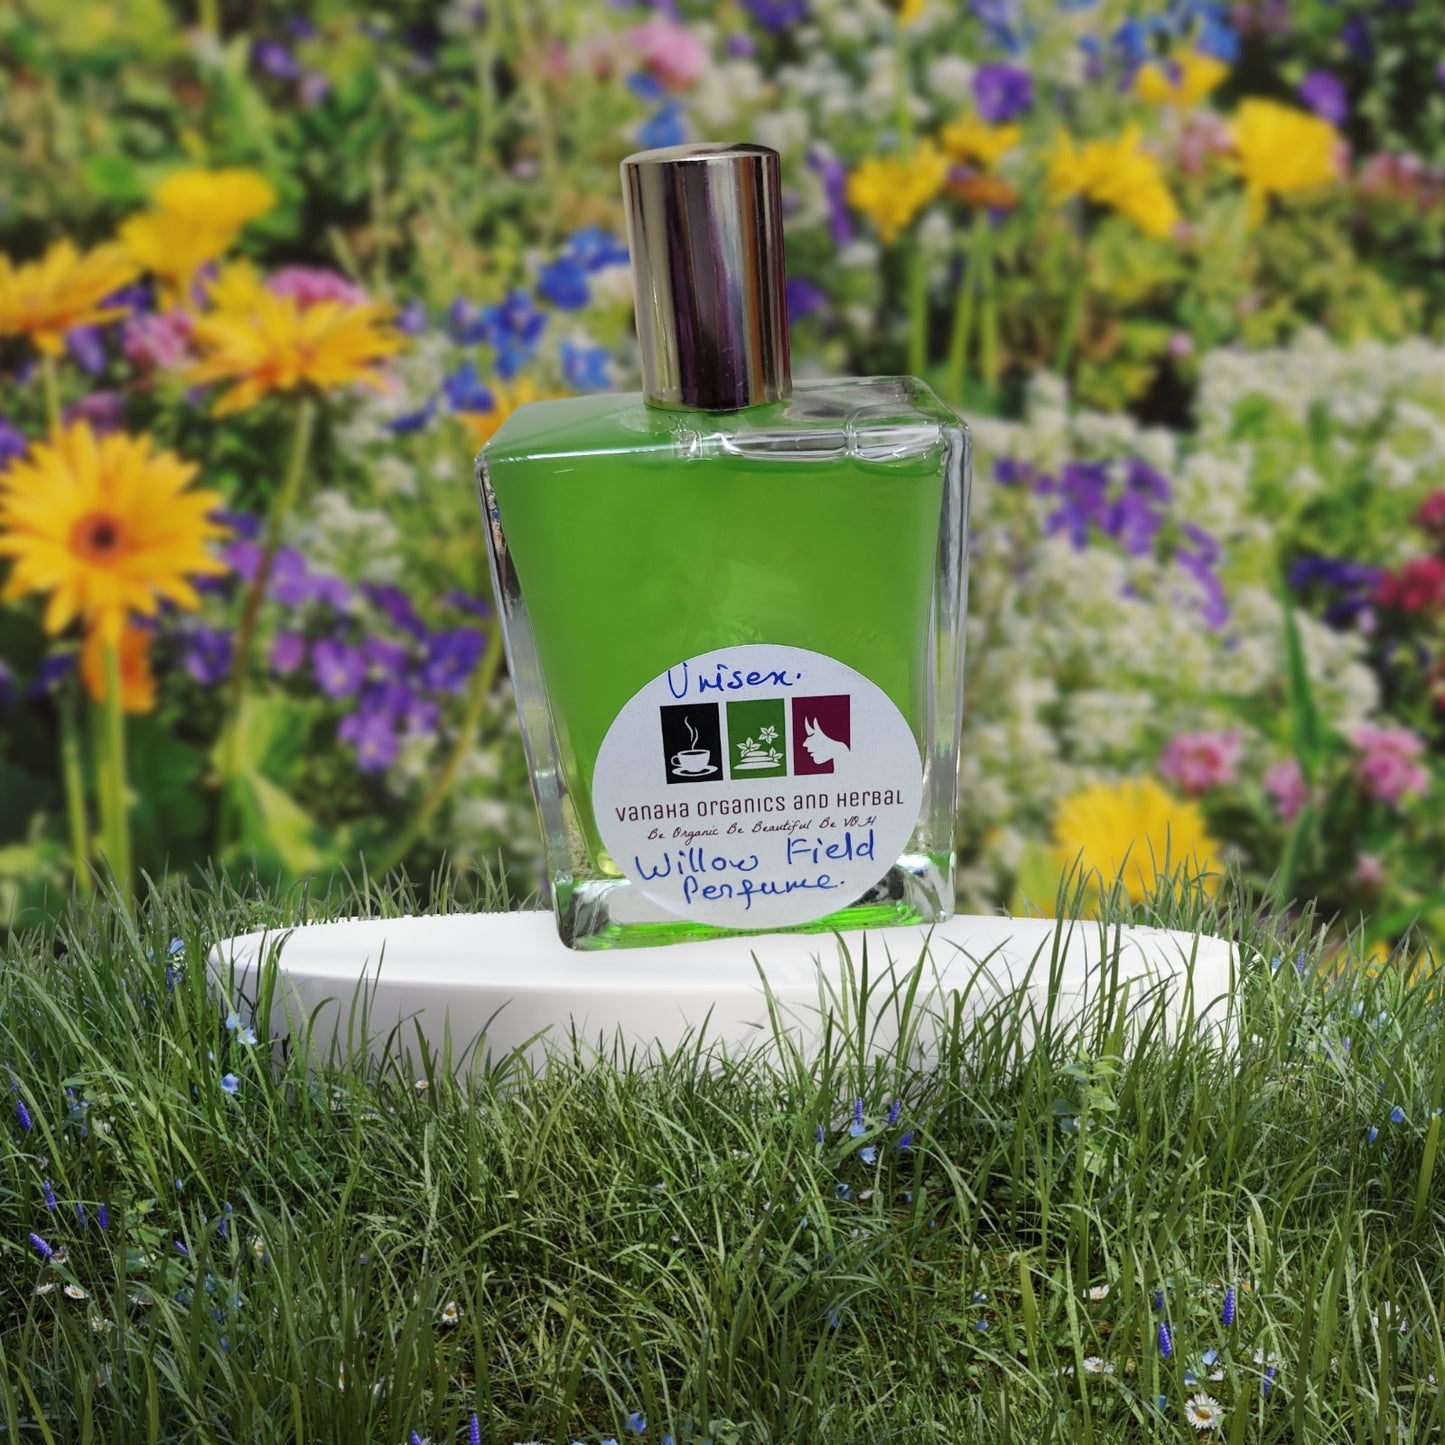 Willow field unisex perfume